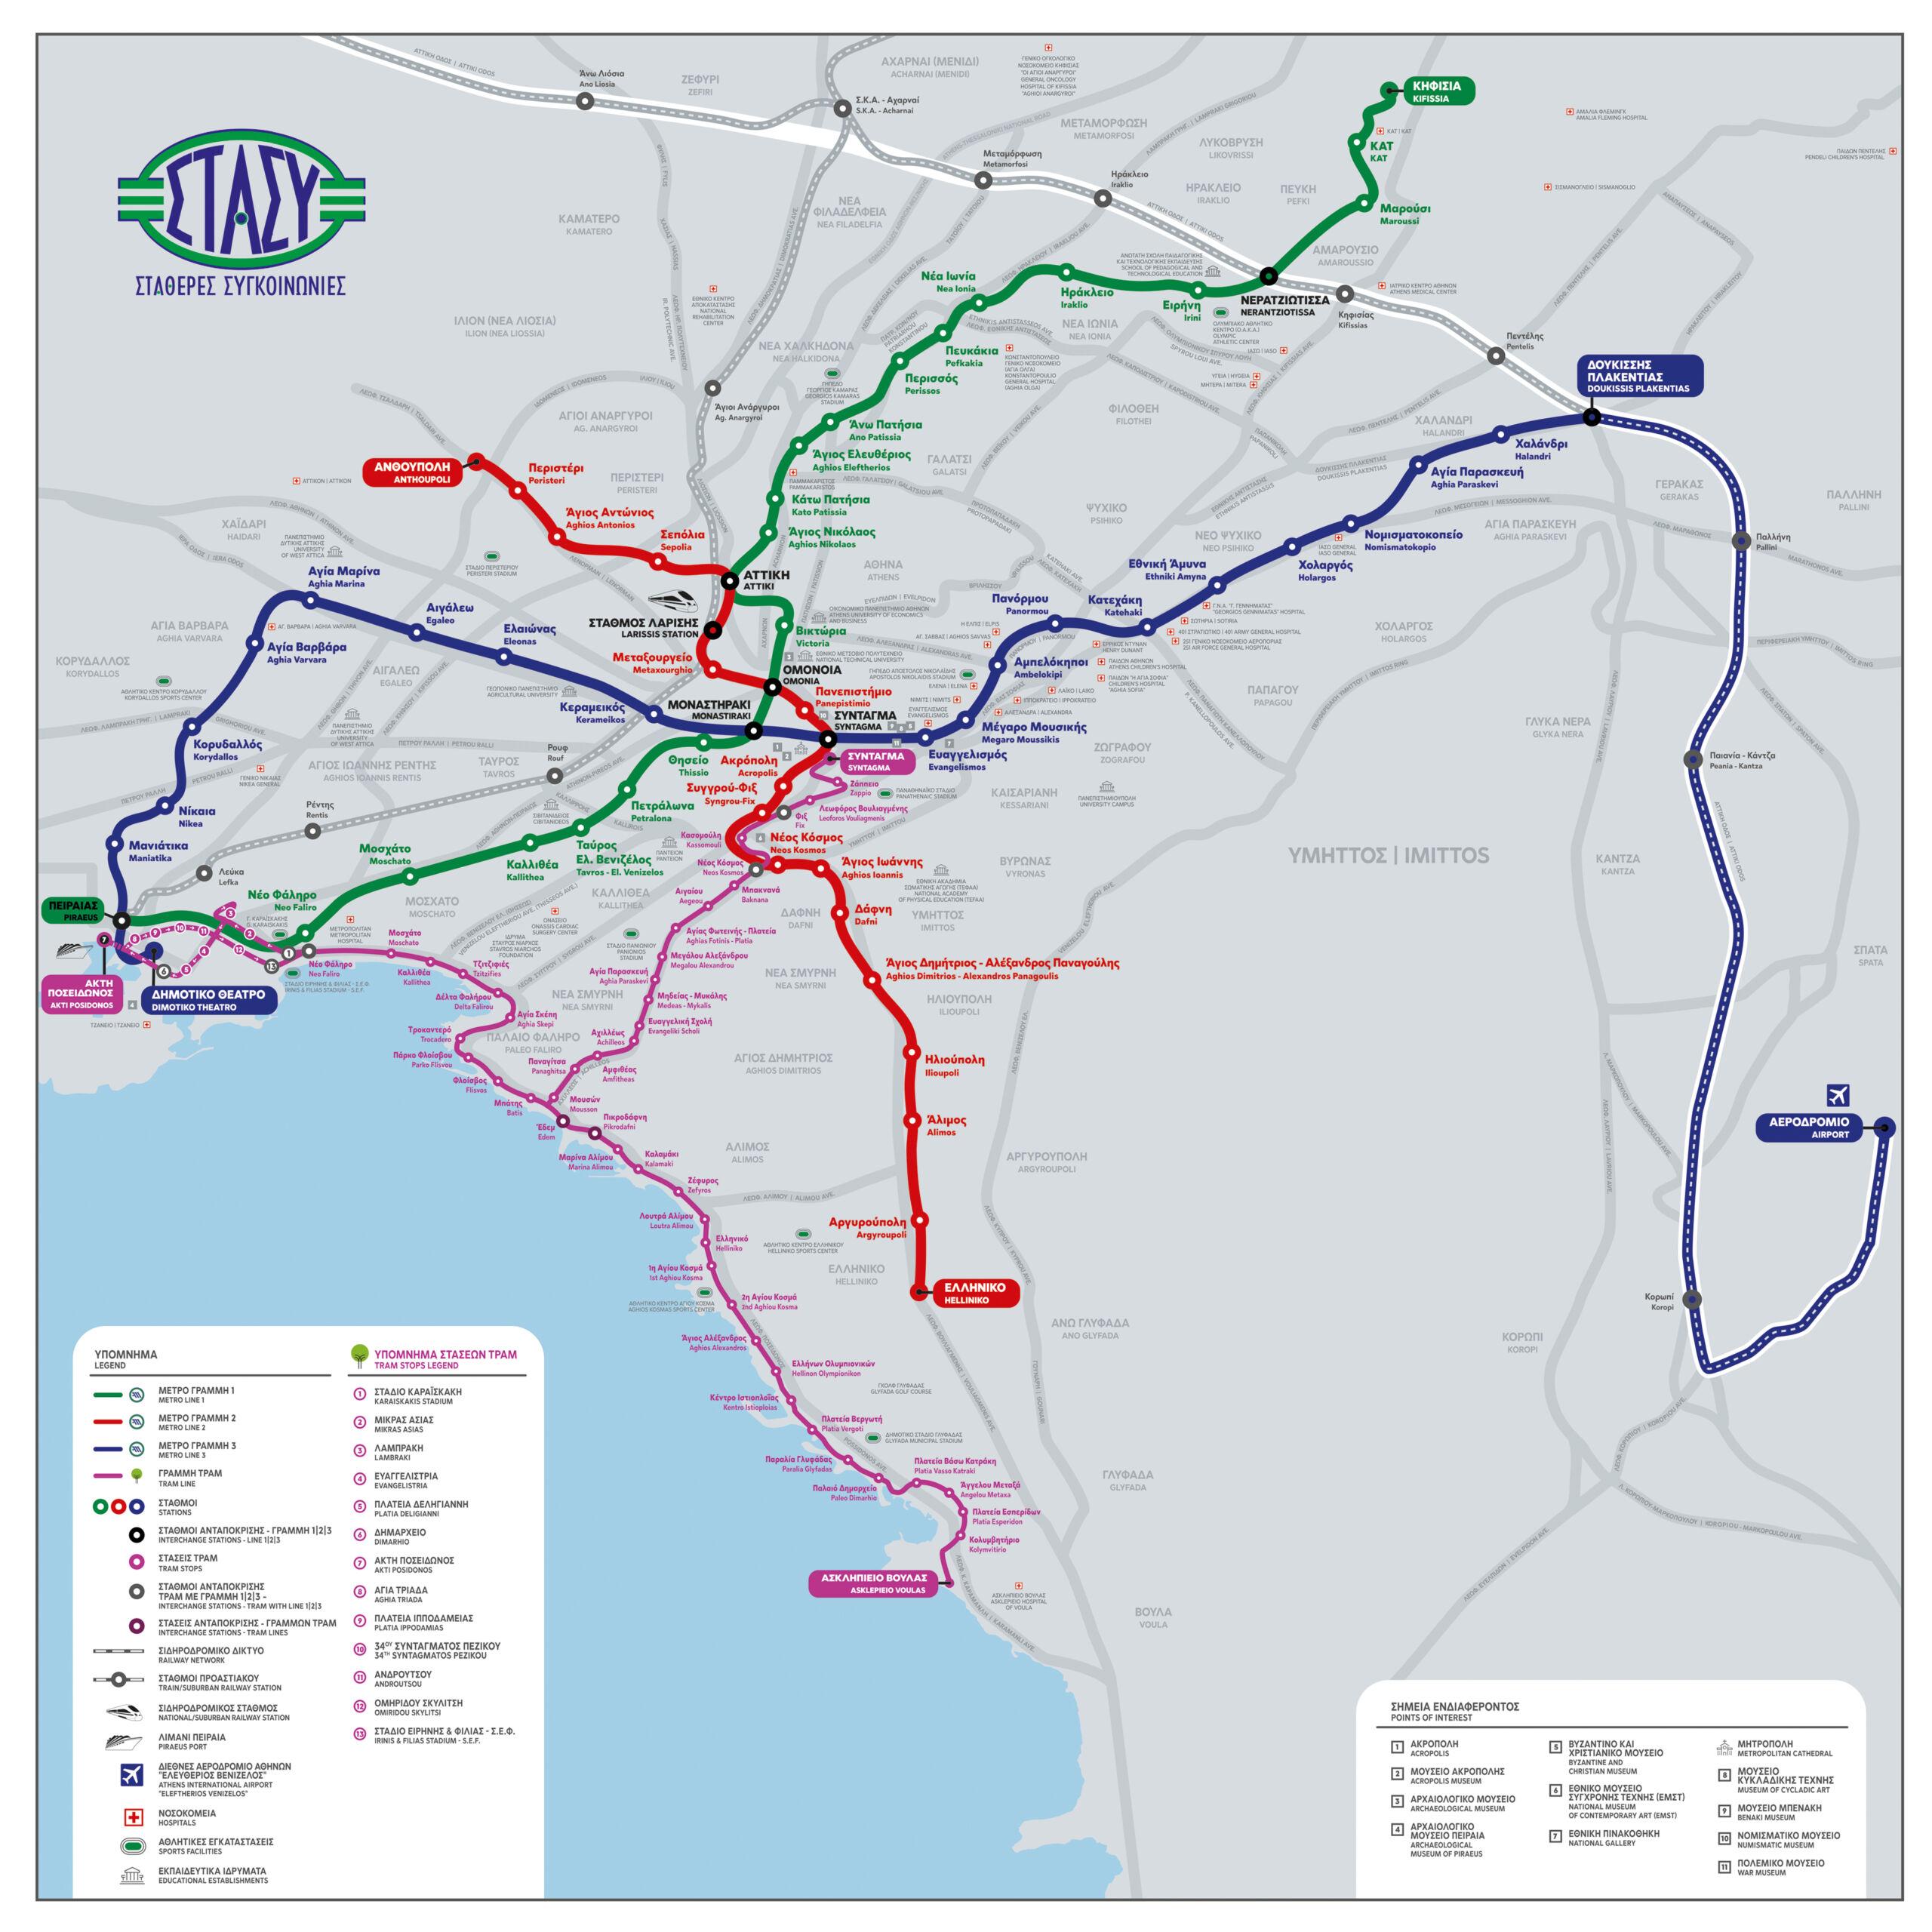 athens greece subway metro and tram railway map